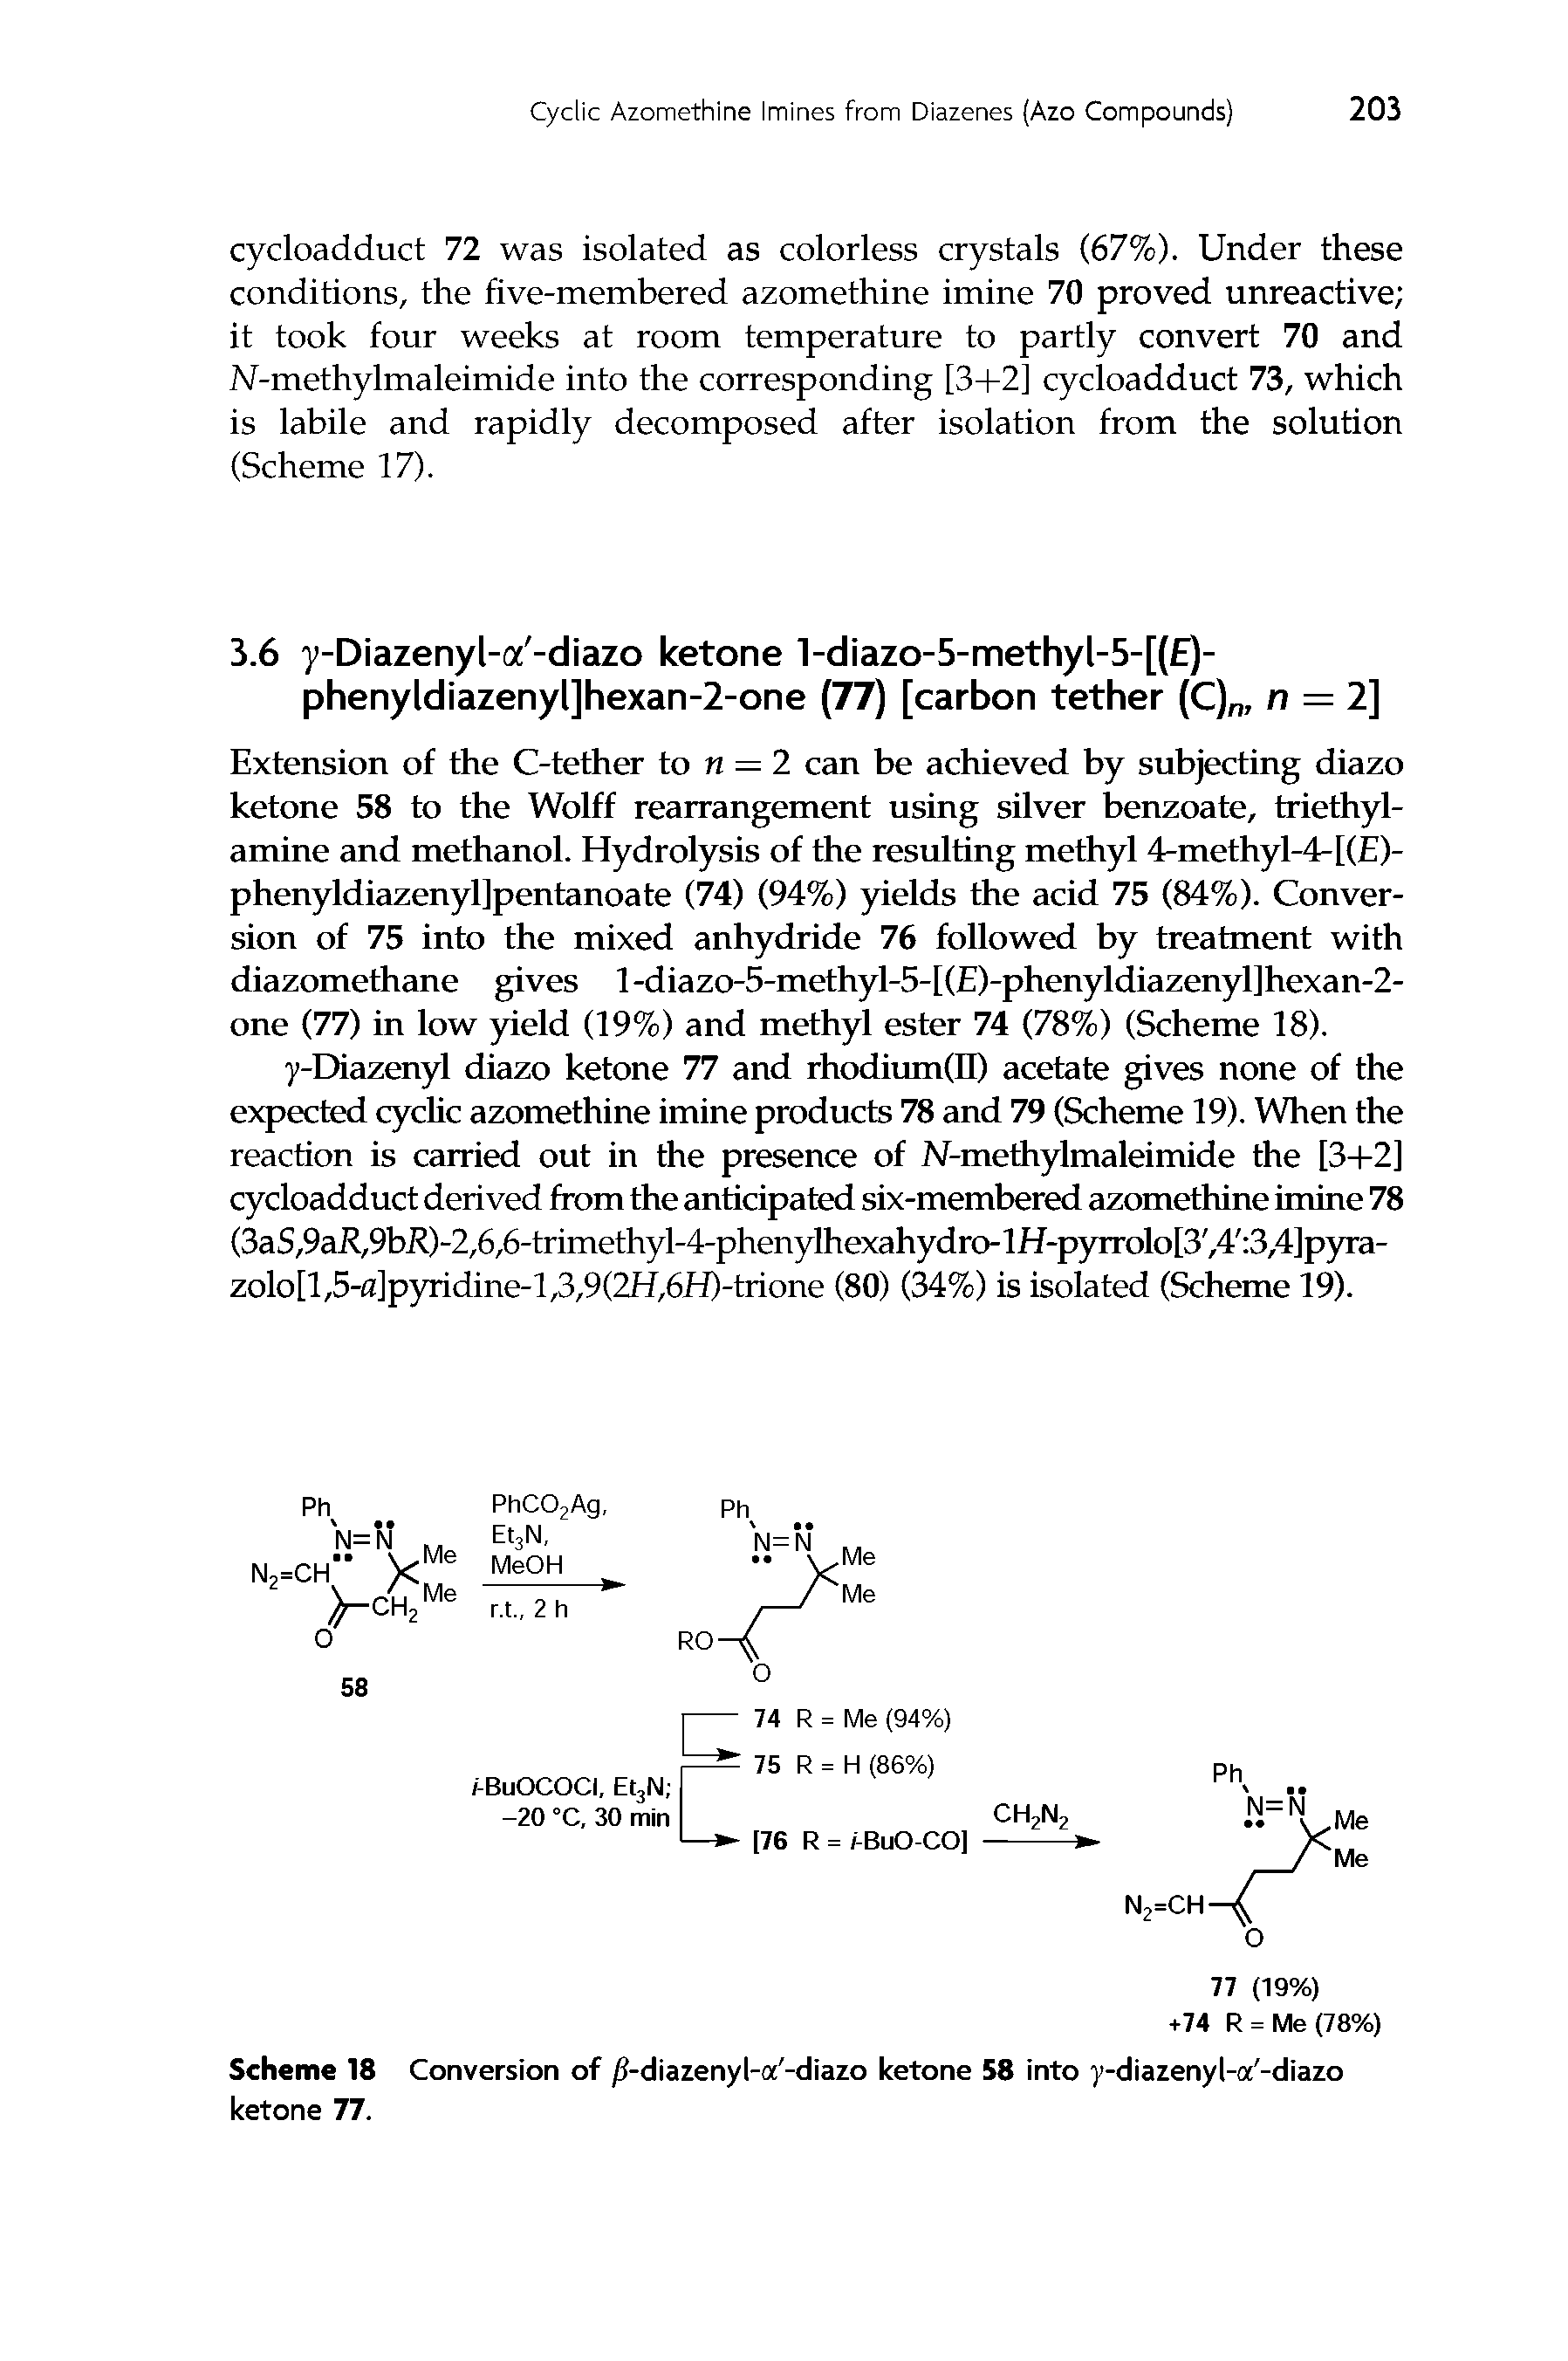 Scheme 18 Conversion of /i-diazenyl-ot -diazo ketone 58 into y-diazenyl-ot -diazo ketone 77.